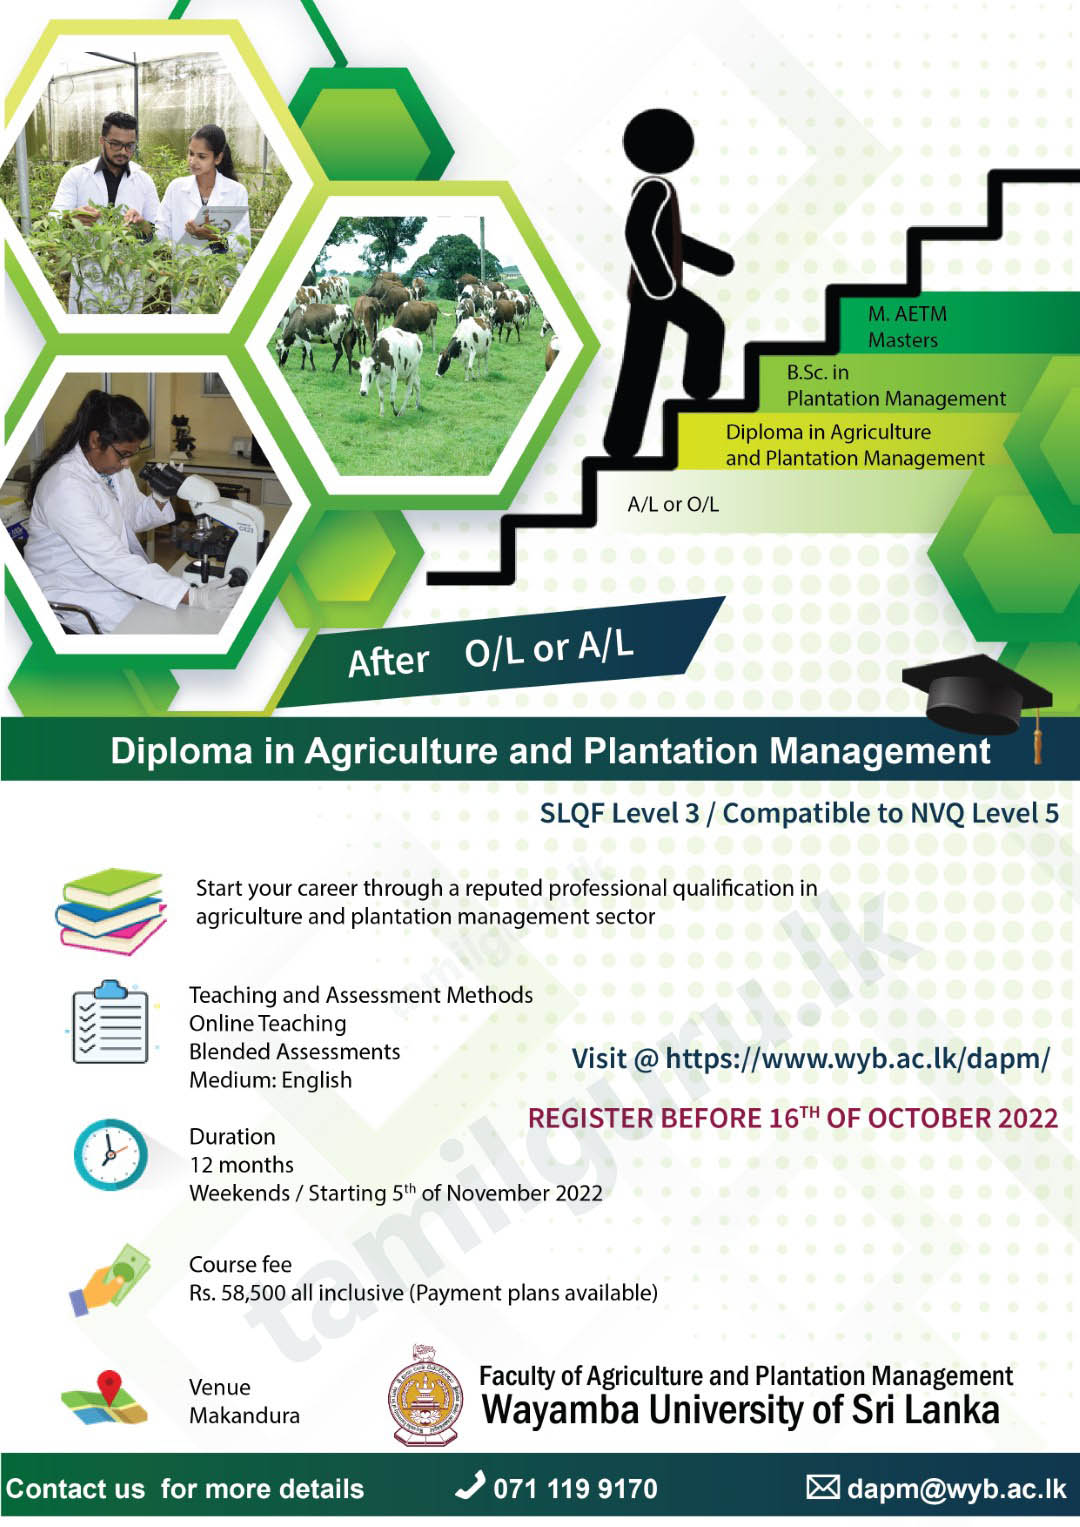 Diploma in Agriculture and Plantation Management (DAPM) Application 2022 - Wayamba University of Sri Lanka